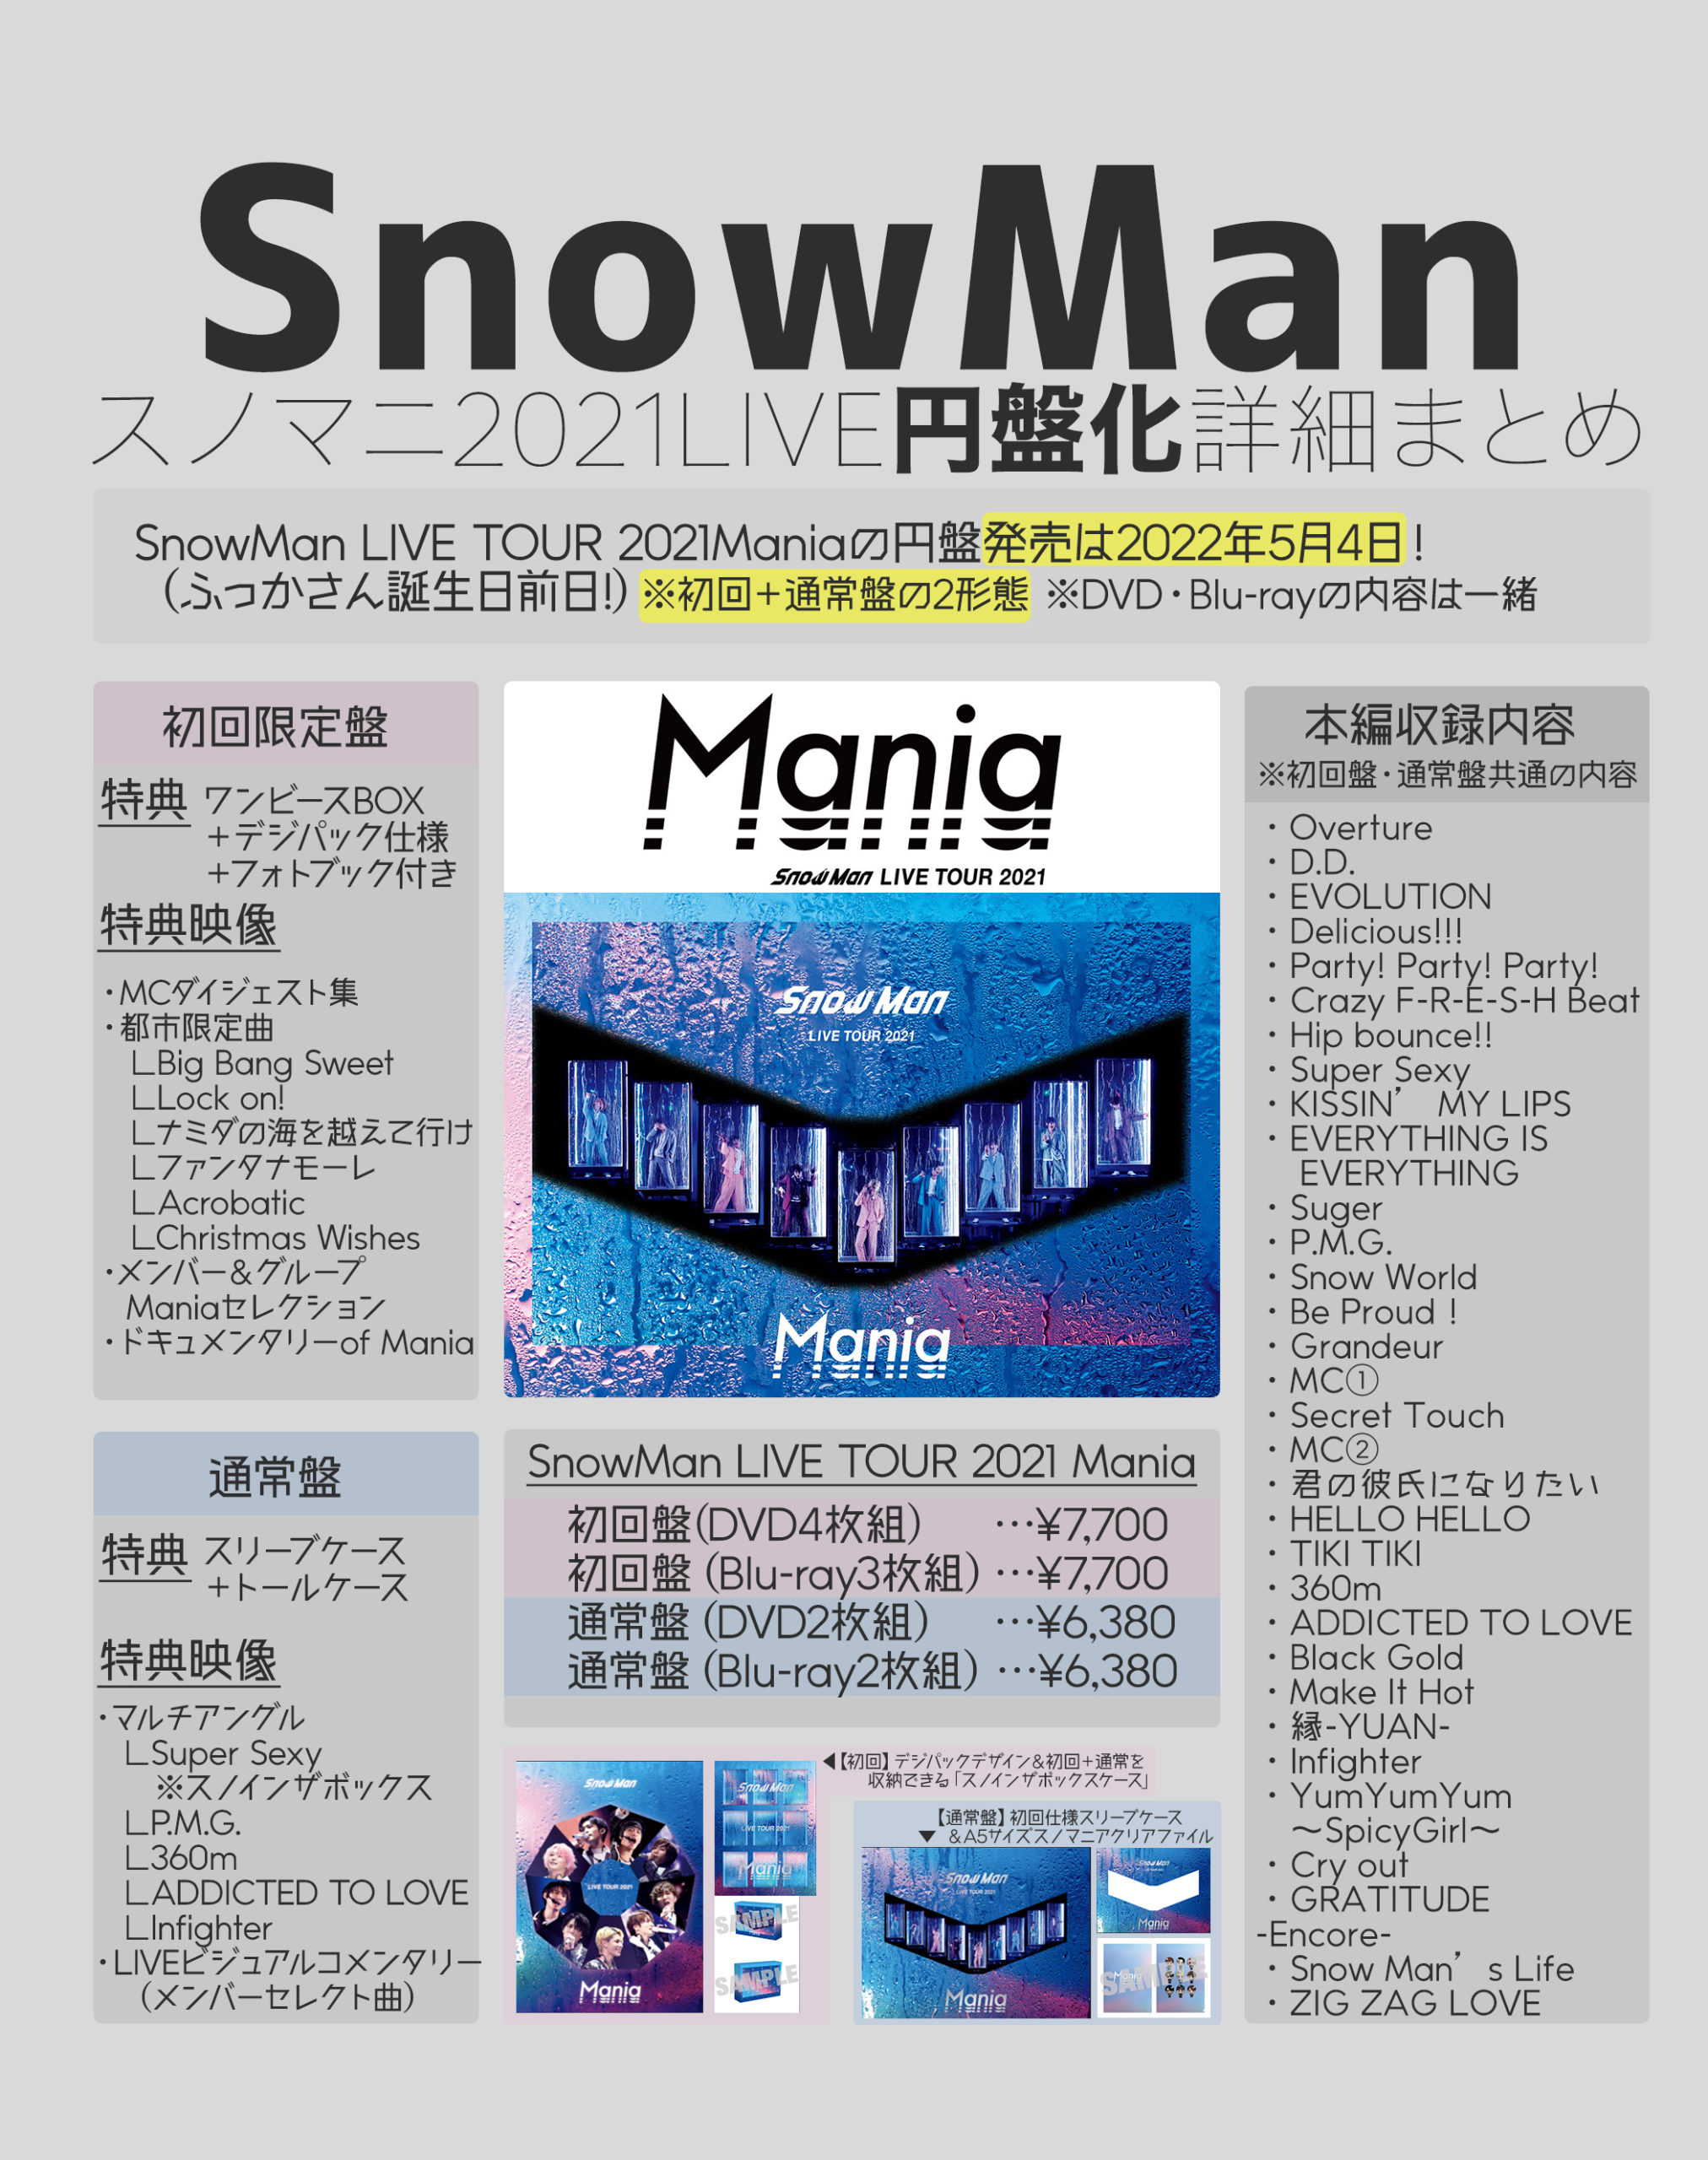 Snow Man - Snow Man LIVE TOUR 2021 Mania初回盤 DVDの+spbgp44.ru